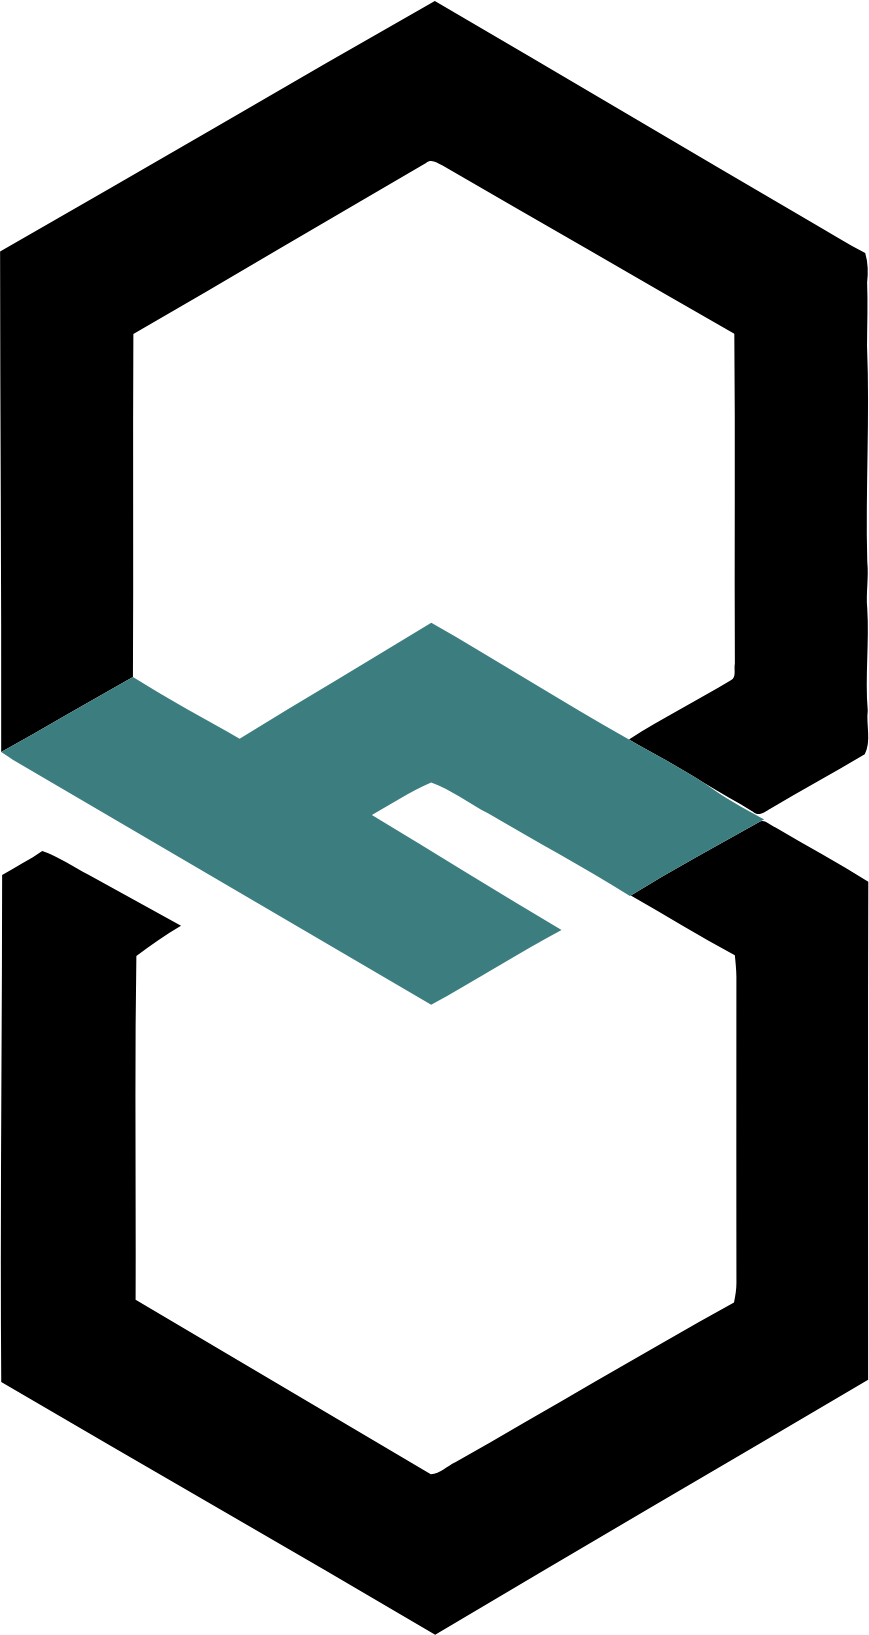 Hut 8 Mining logo (transparent PNG)